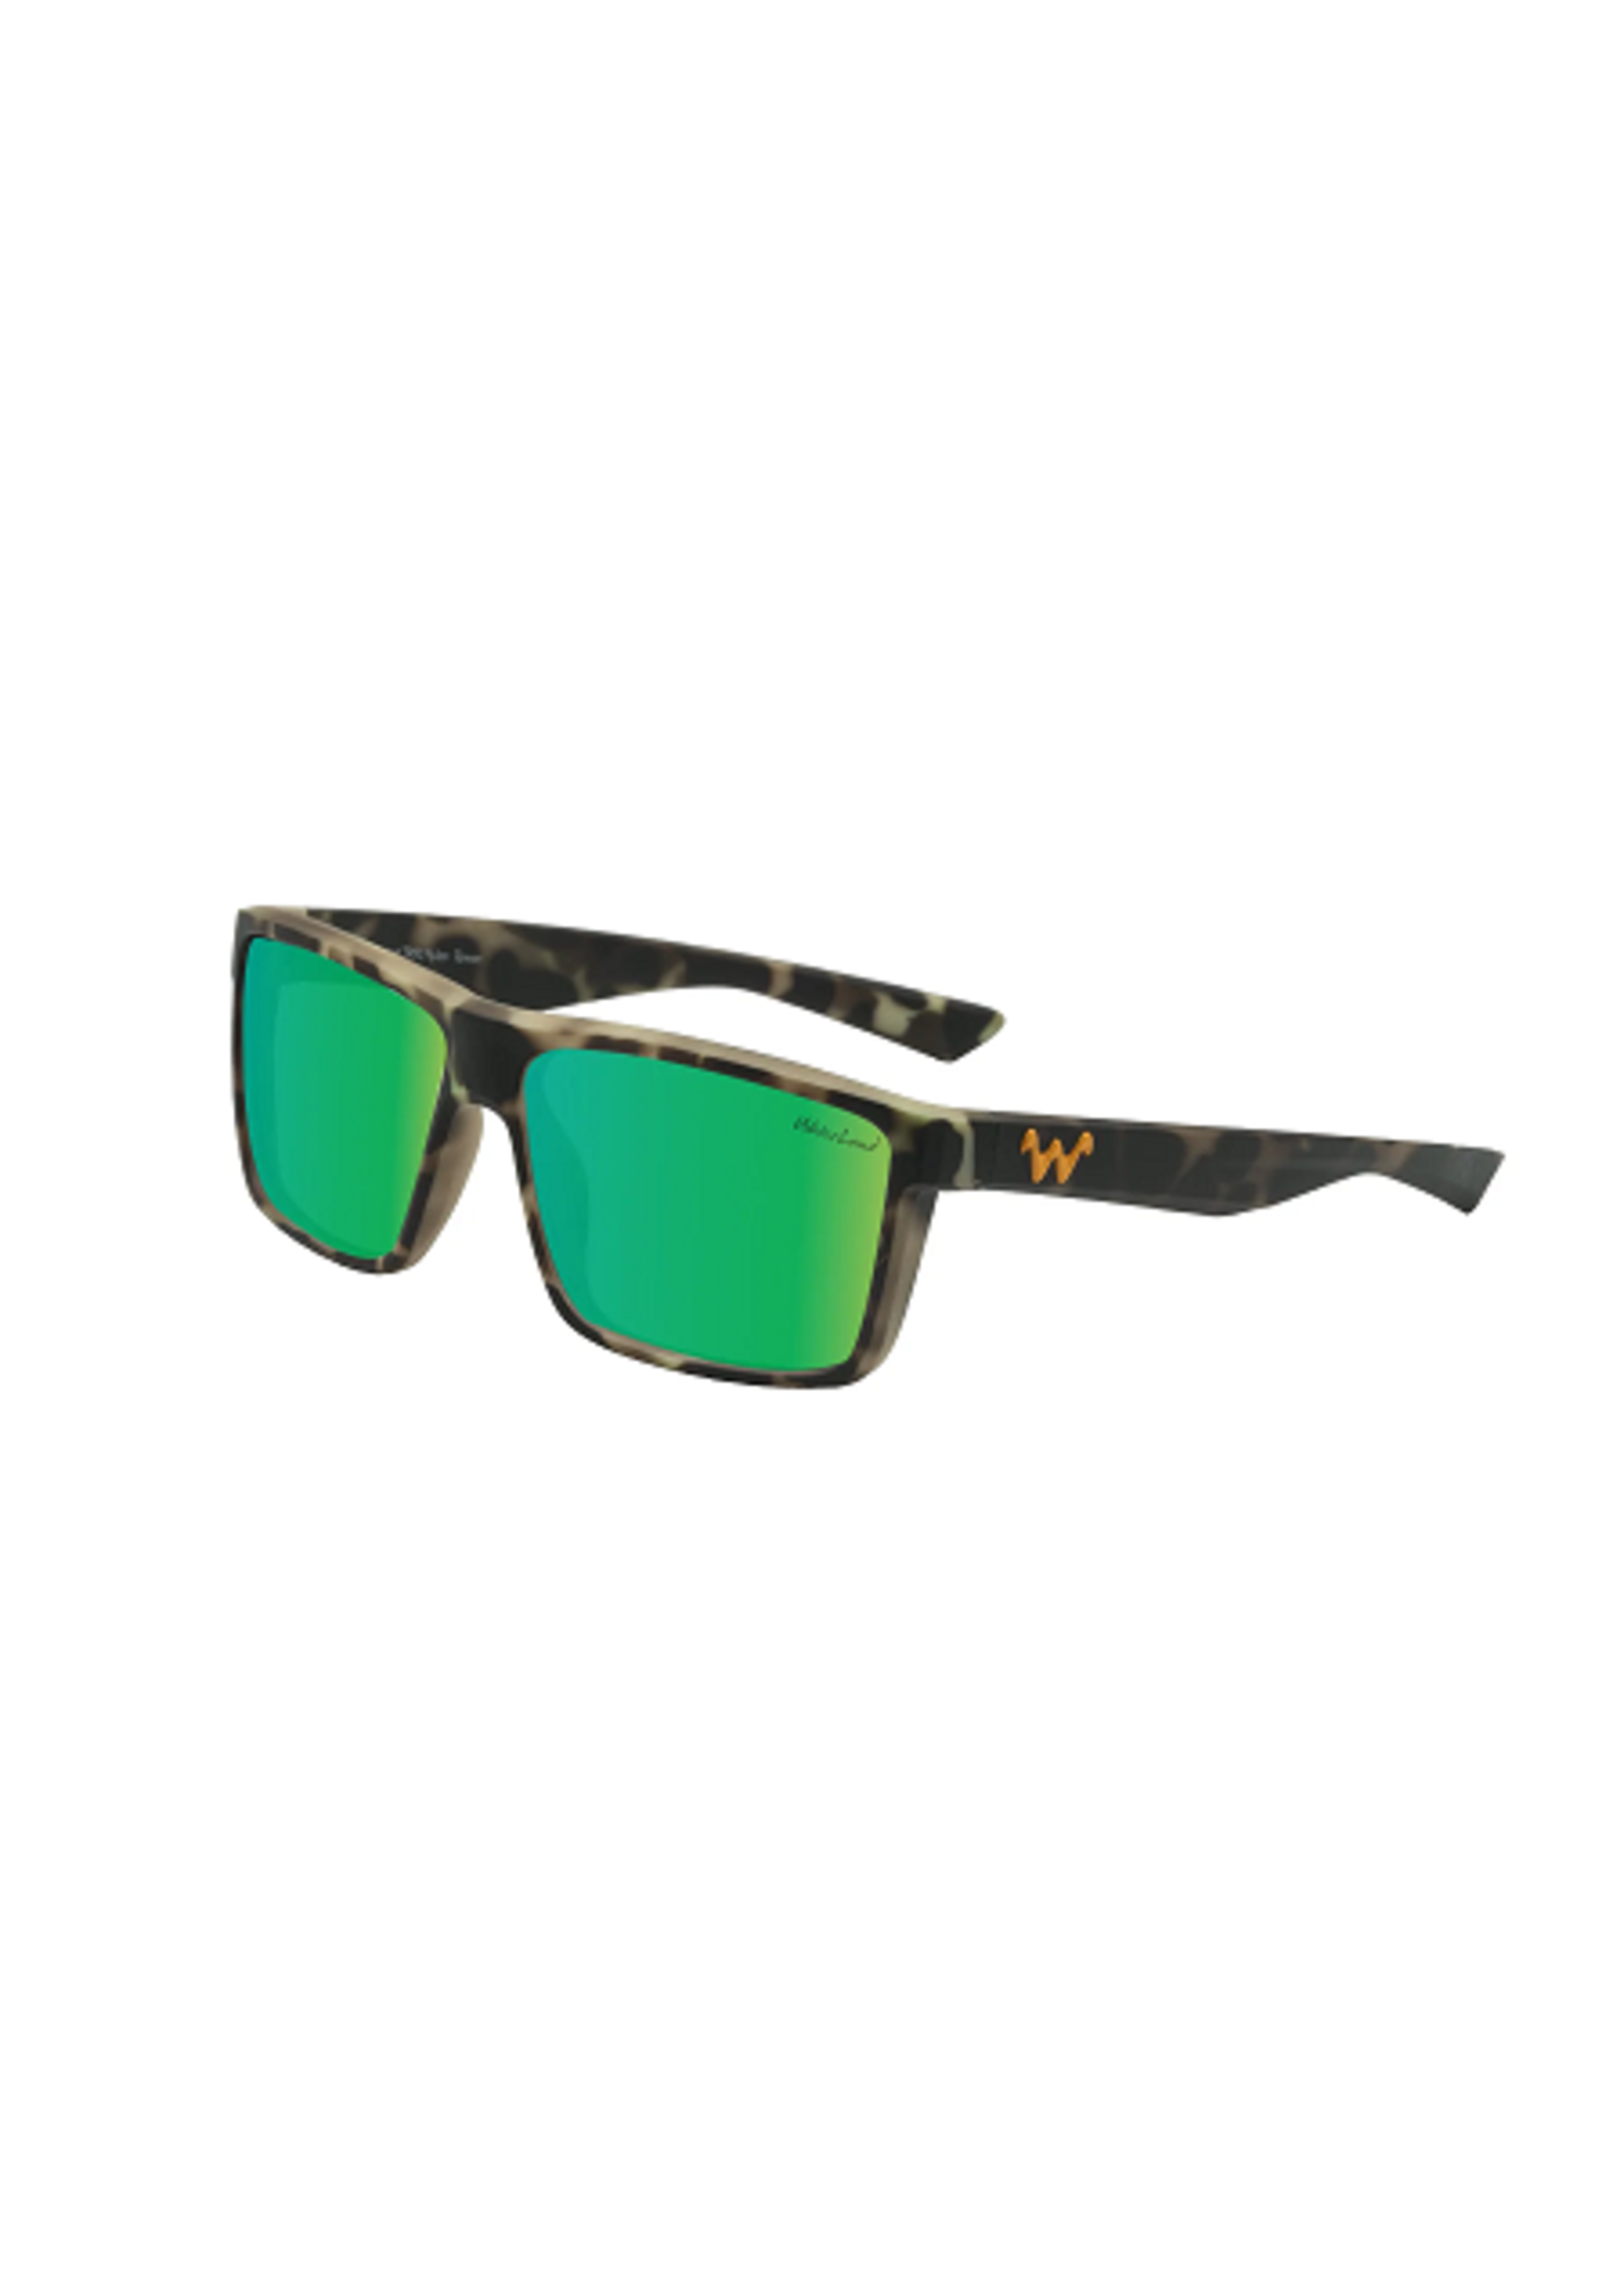 WaterLand Co, LLC. WaterLand Slaunch Series Polarized Sunglasses